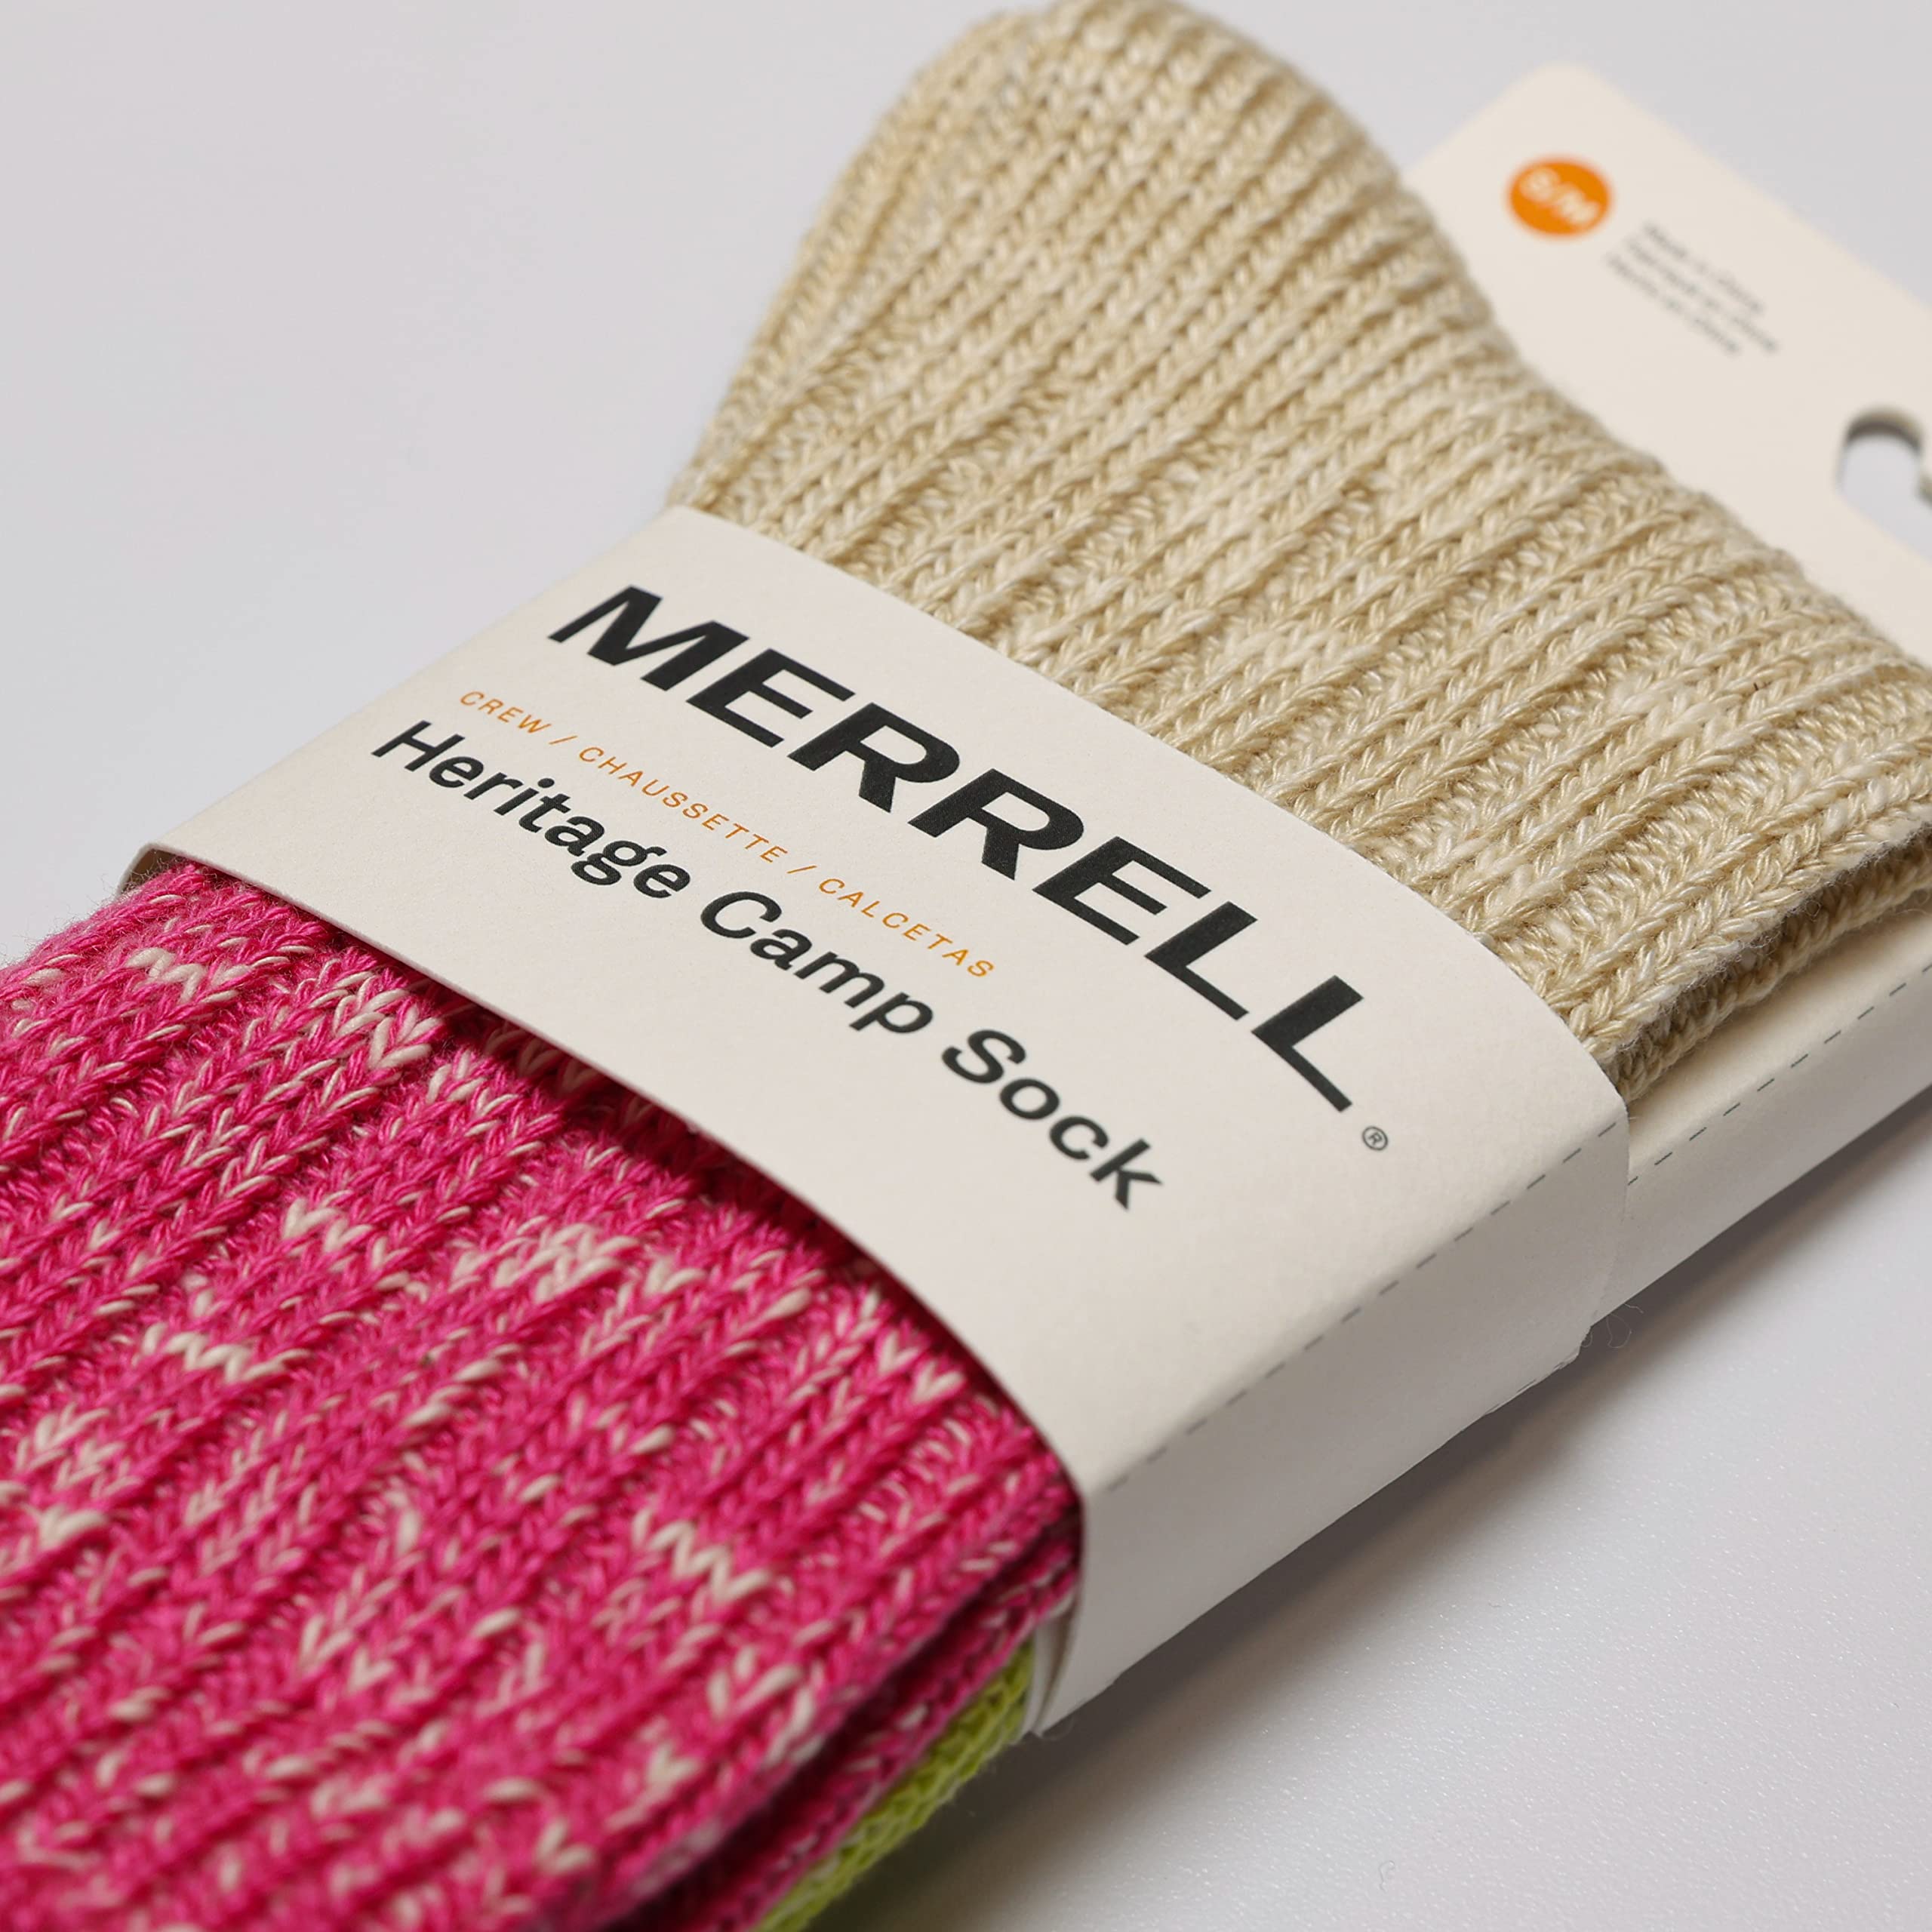 Merrell Men's and Women's Heritage Camp Wool Blend Crew Socks-1 Pair-Heat Transfer Logo and Moisture Wicking